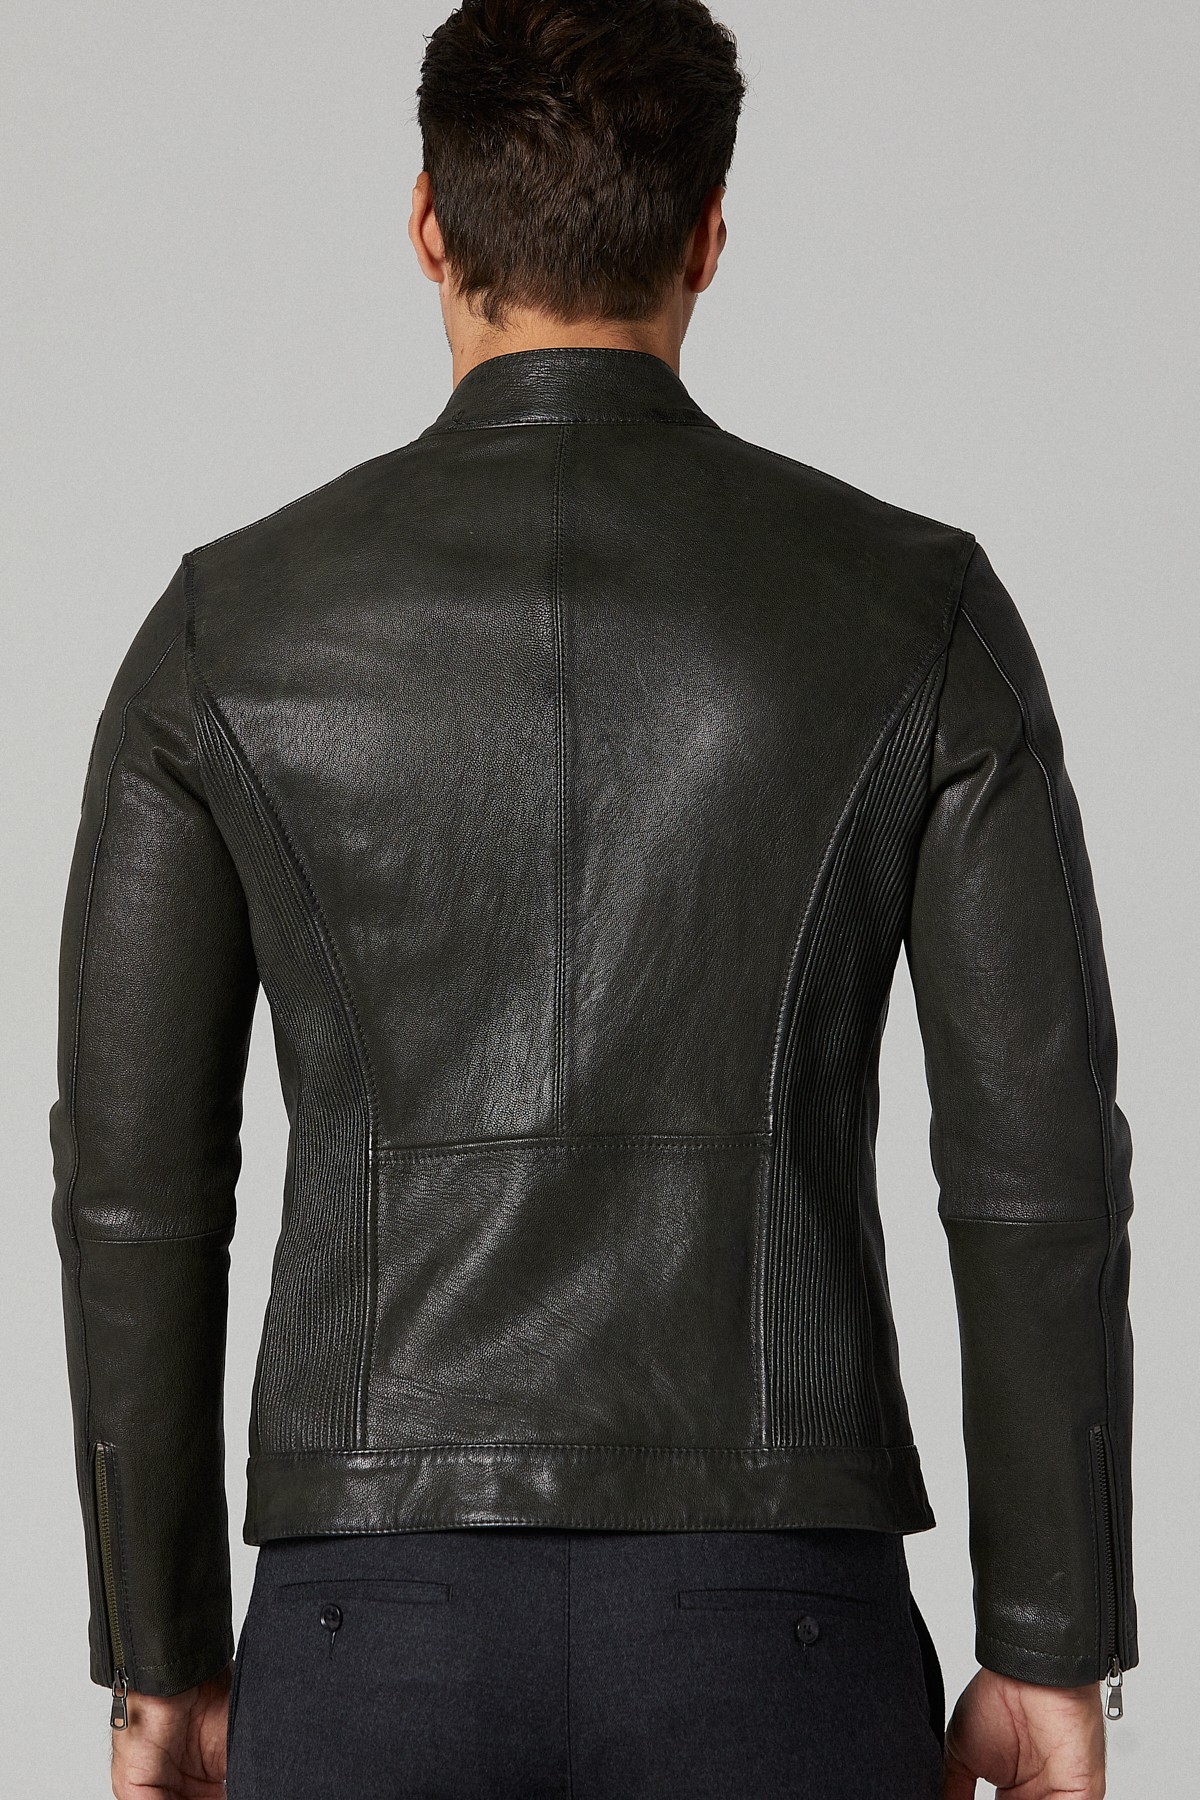 Men's Leather Moto Jacket in Black | Smart Fit Jacket in USA